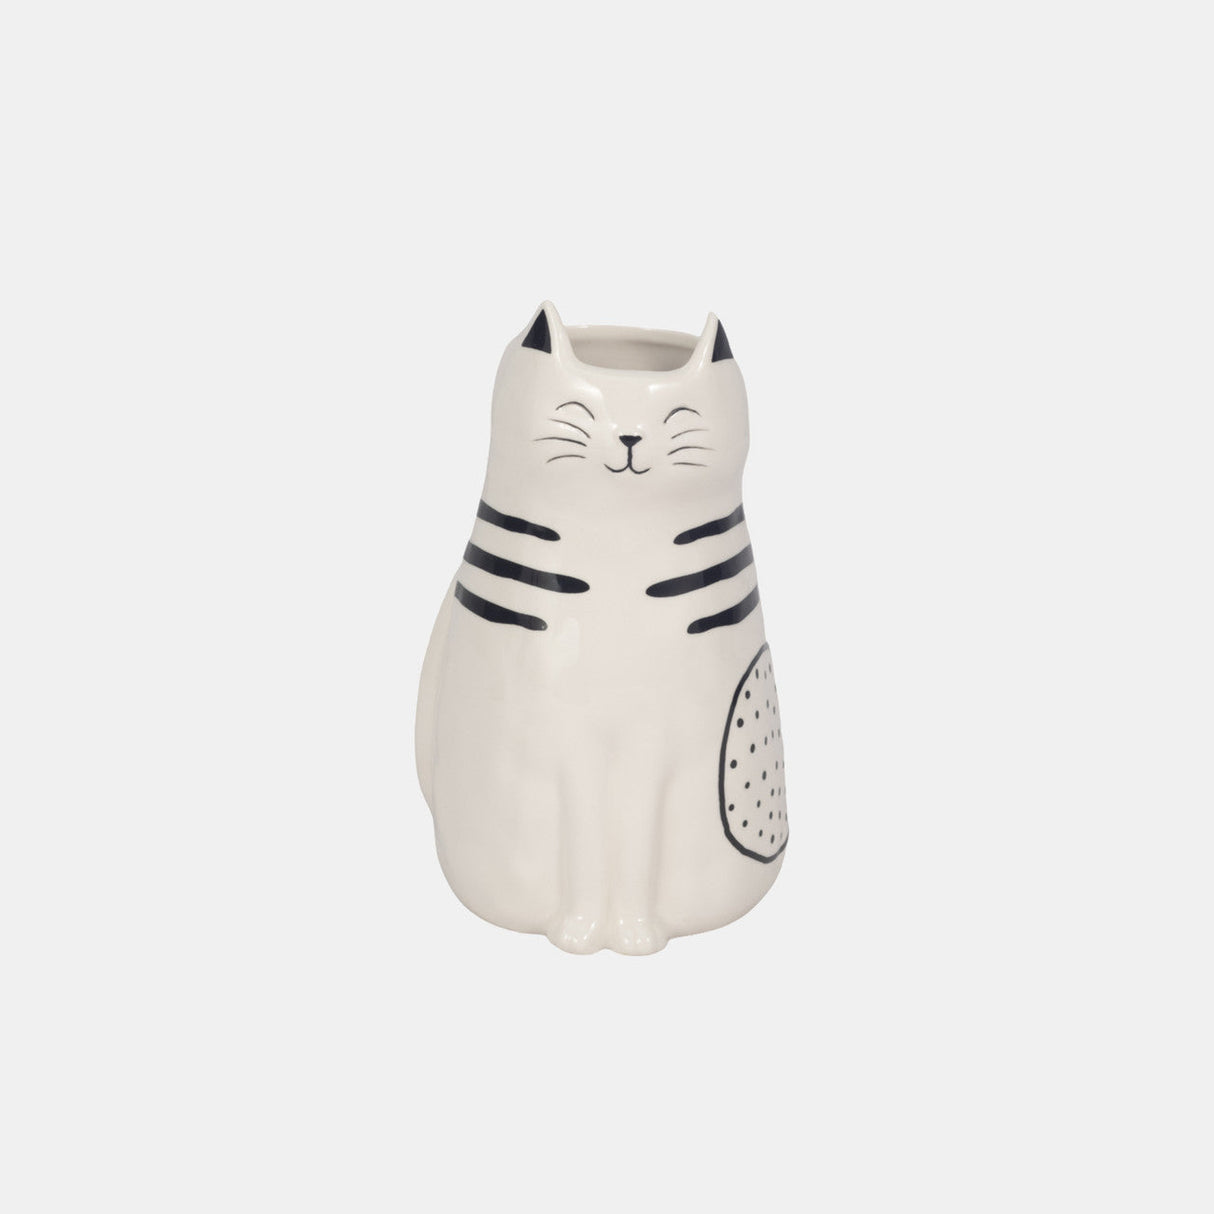 9" Sitting Pretty Kitty With Vase Opening, White/b